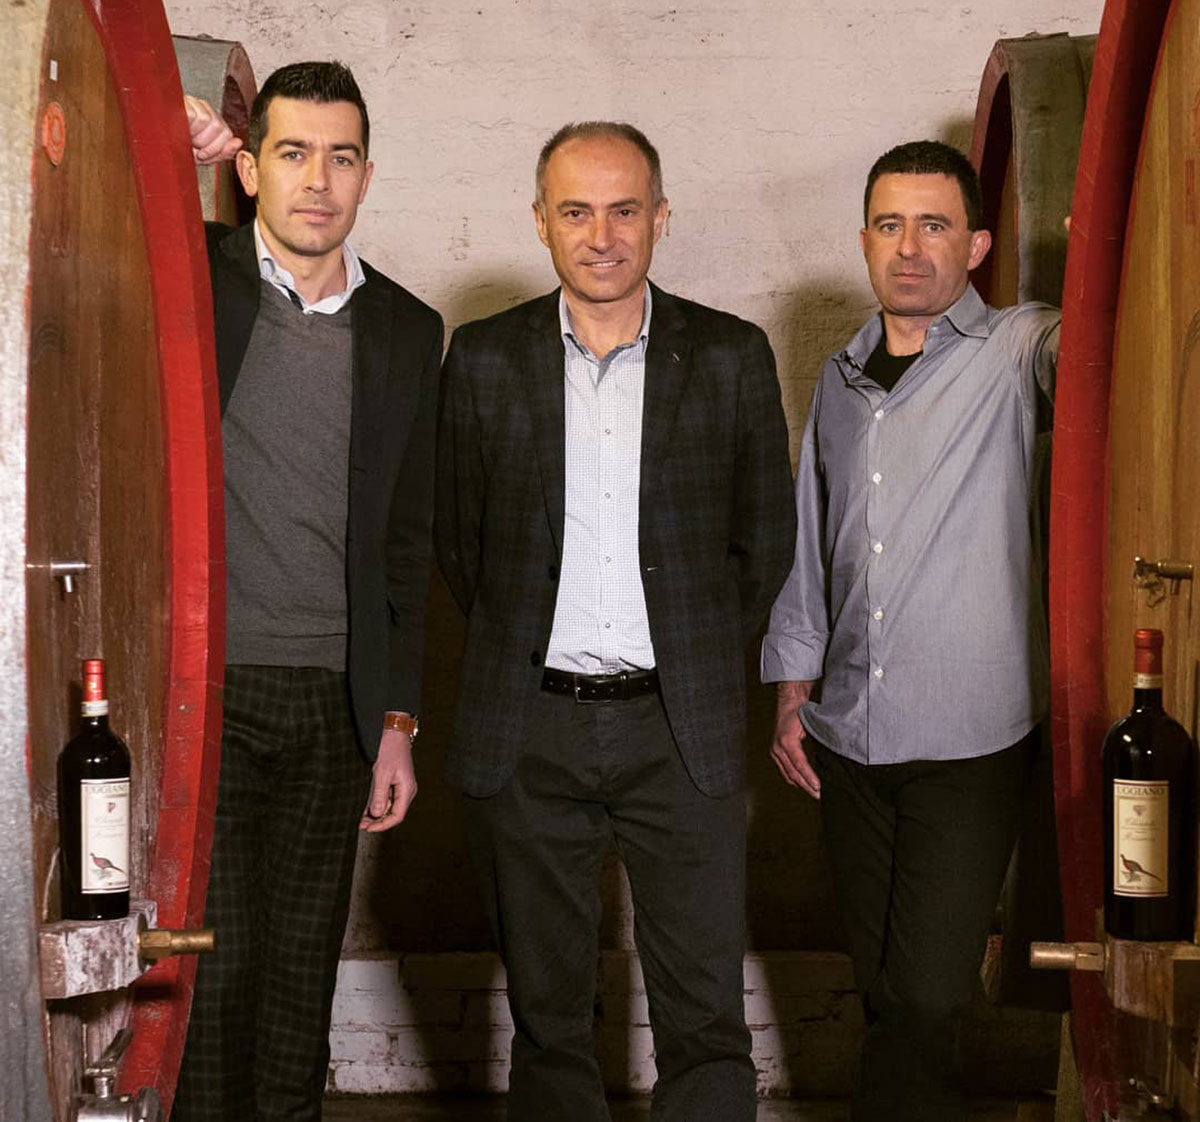 The three partners of Uggiano winery in Tuscany, Italy: Giacomo Fossati, Fabio Martelli and Daniele Prosperi.